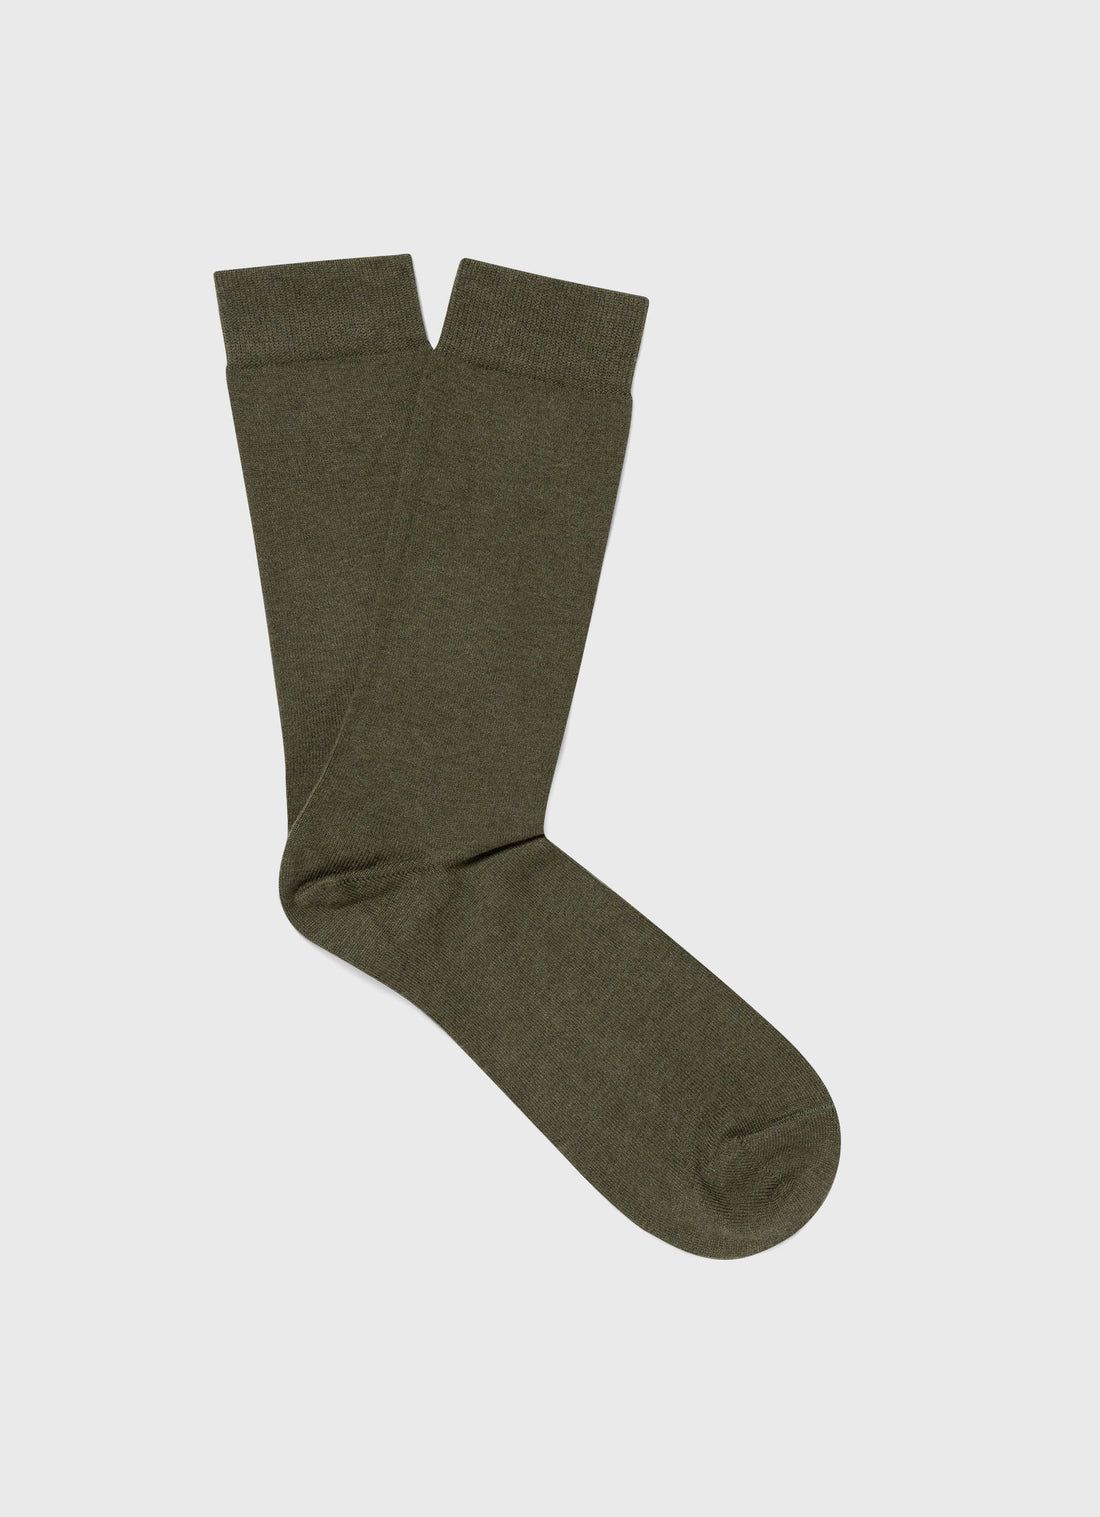 Men's Cotton Socks in Hunter Green